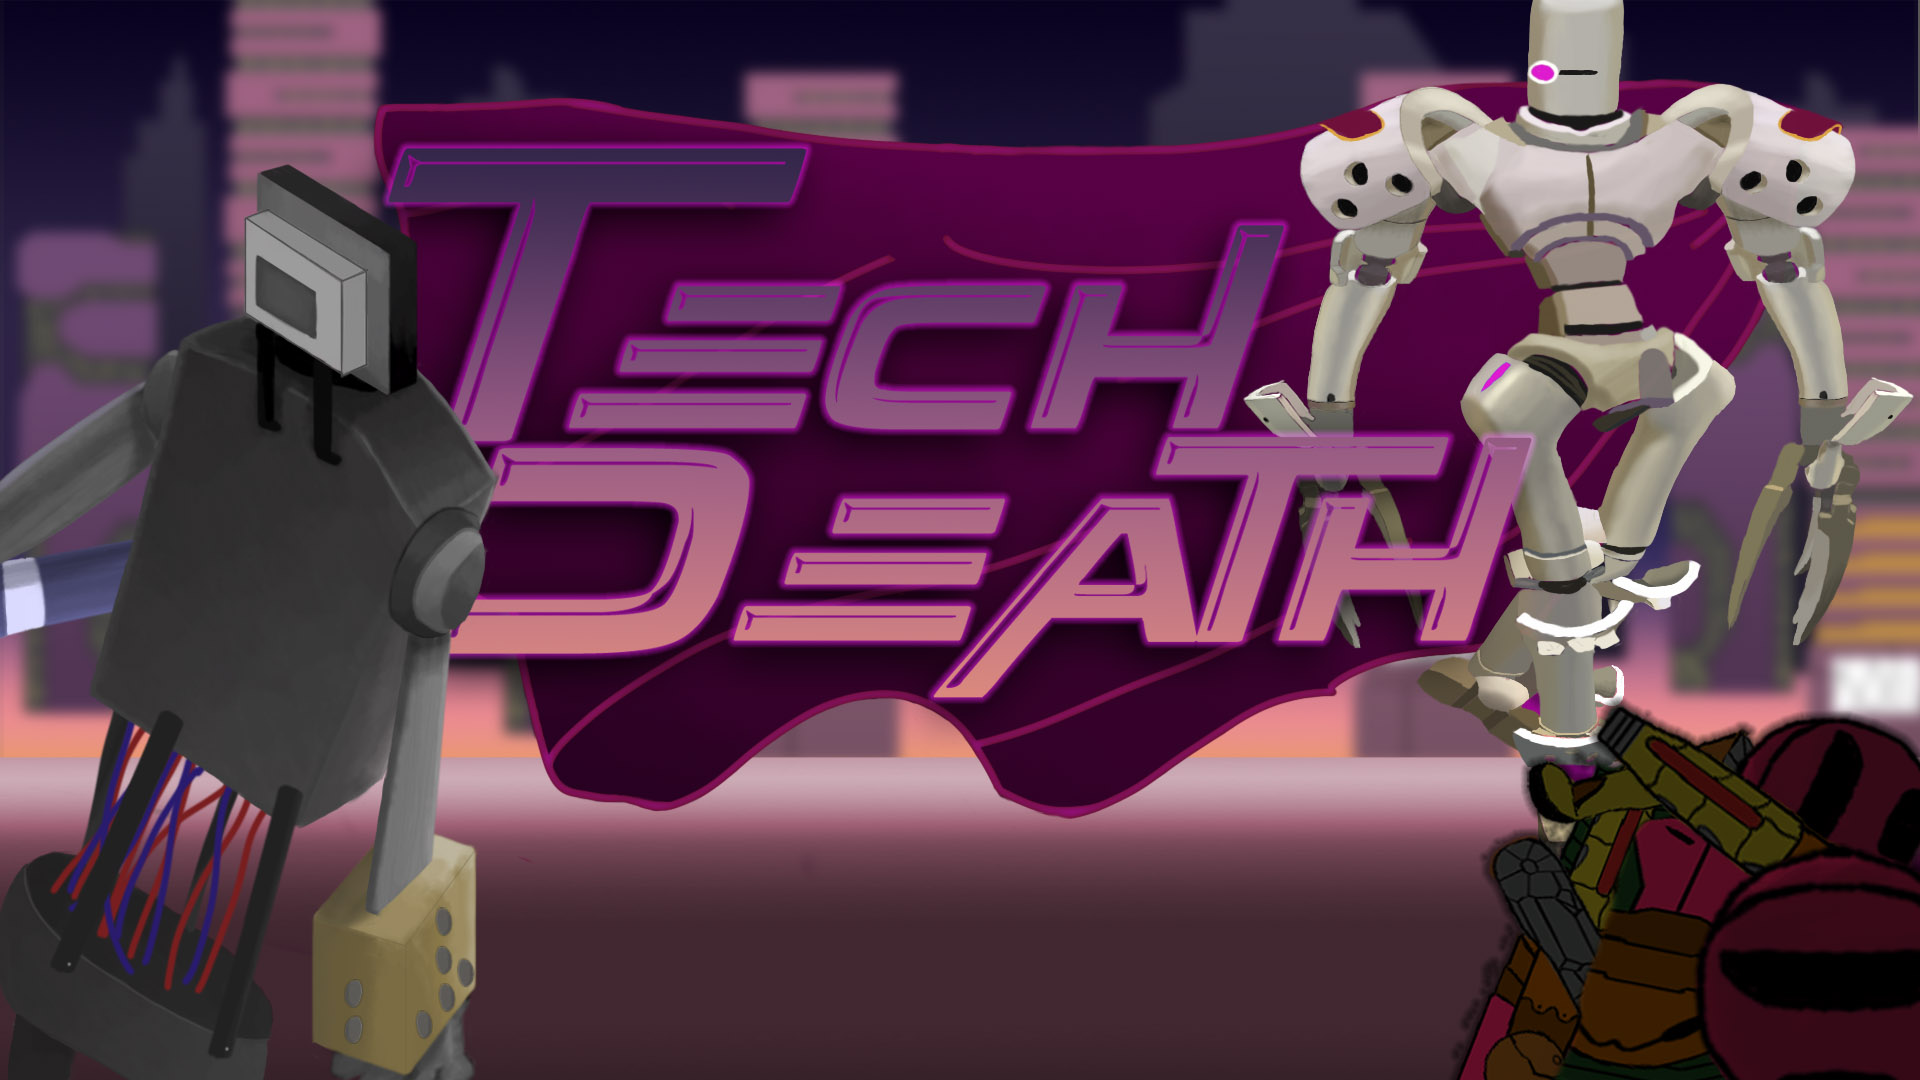 Tech Death